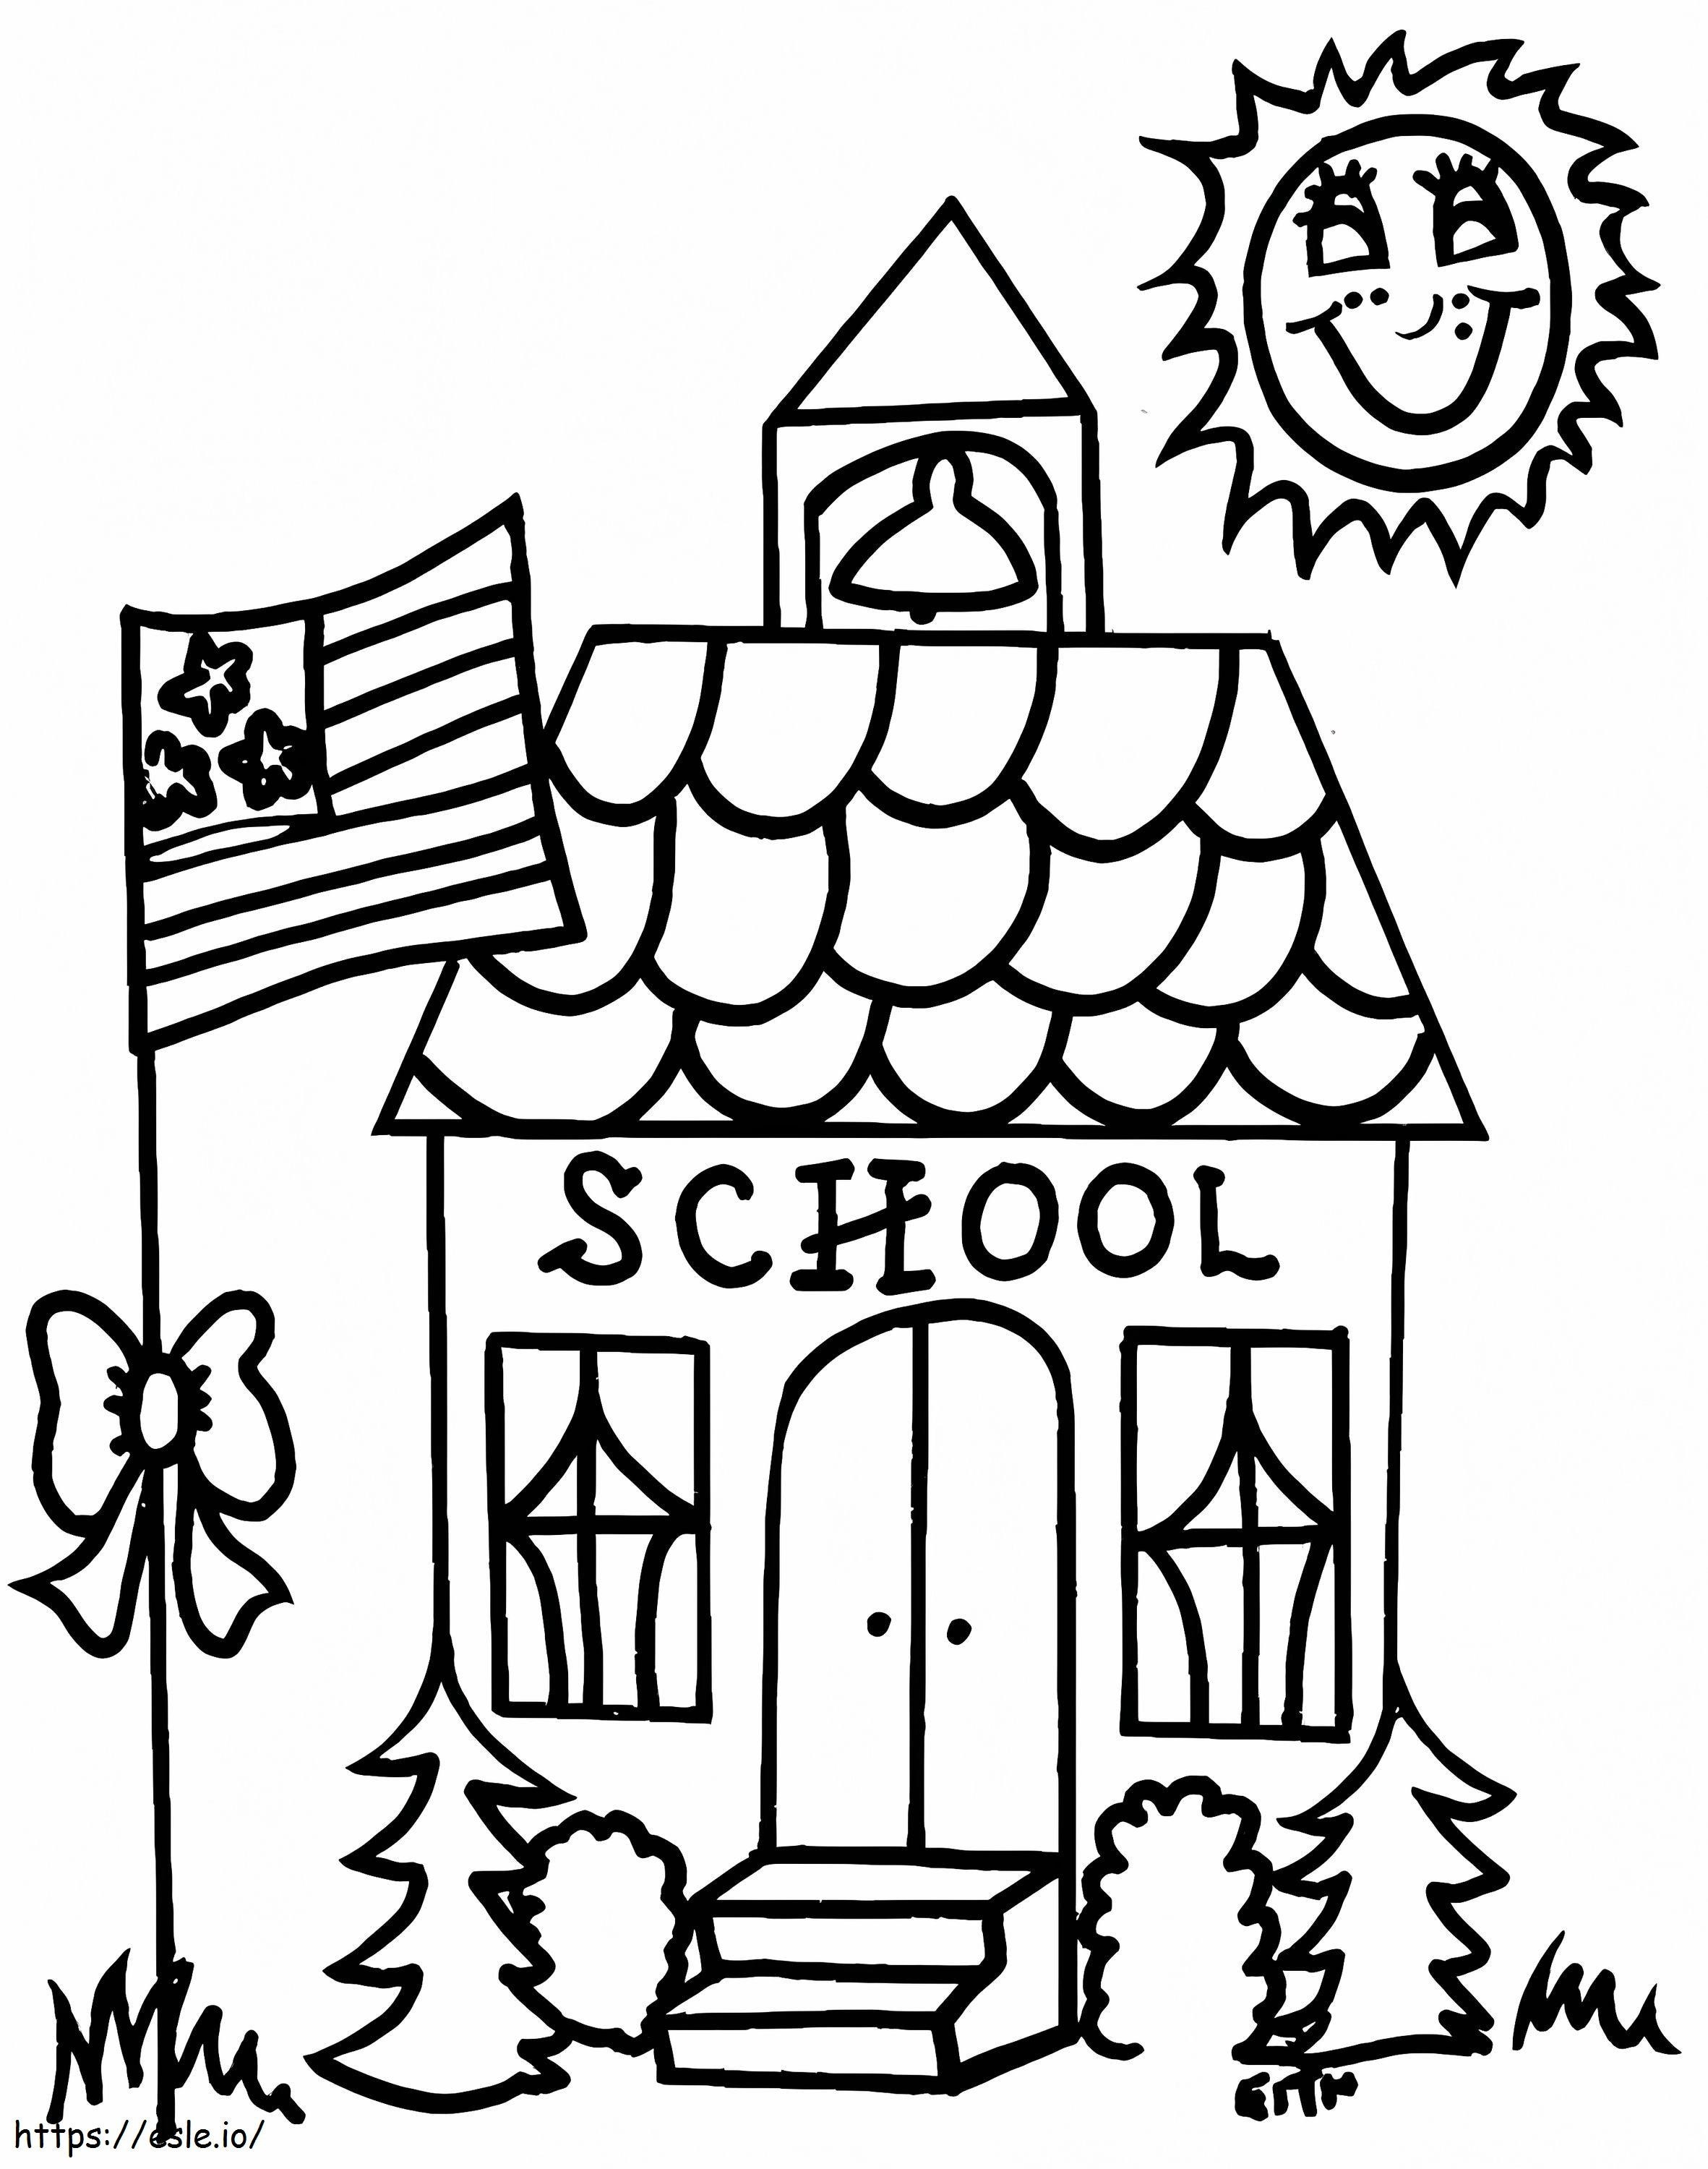 Escola primária para colorir